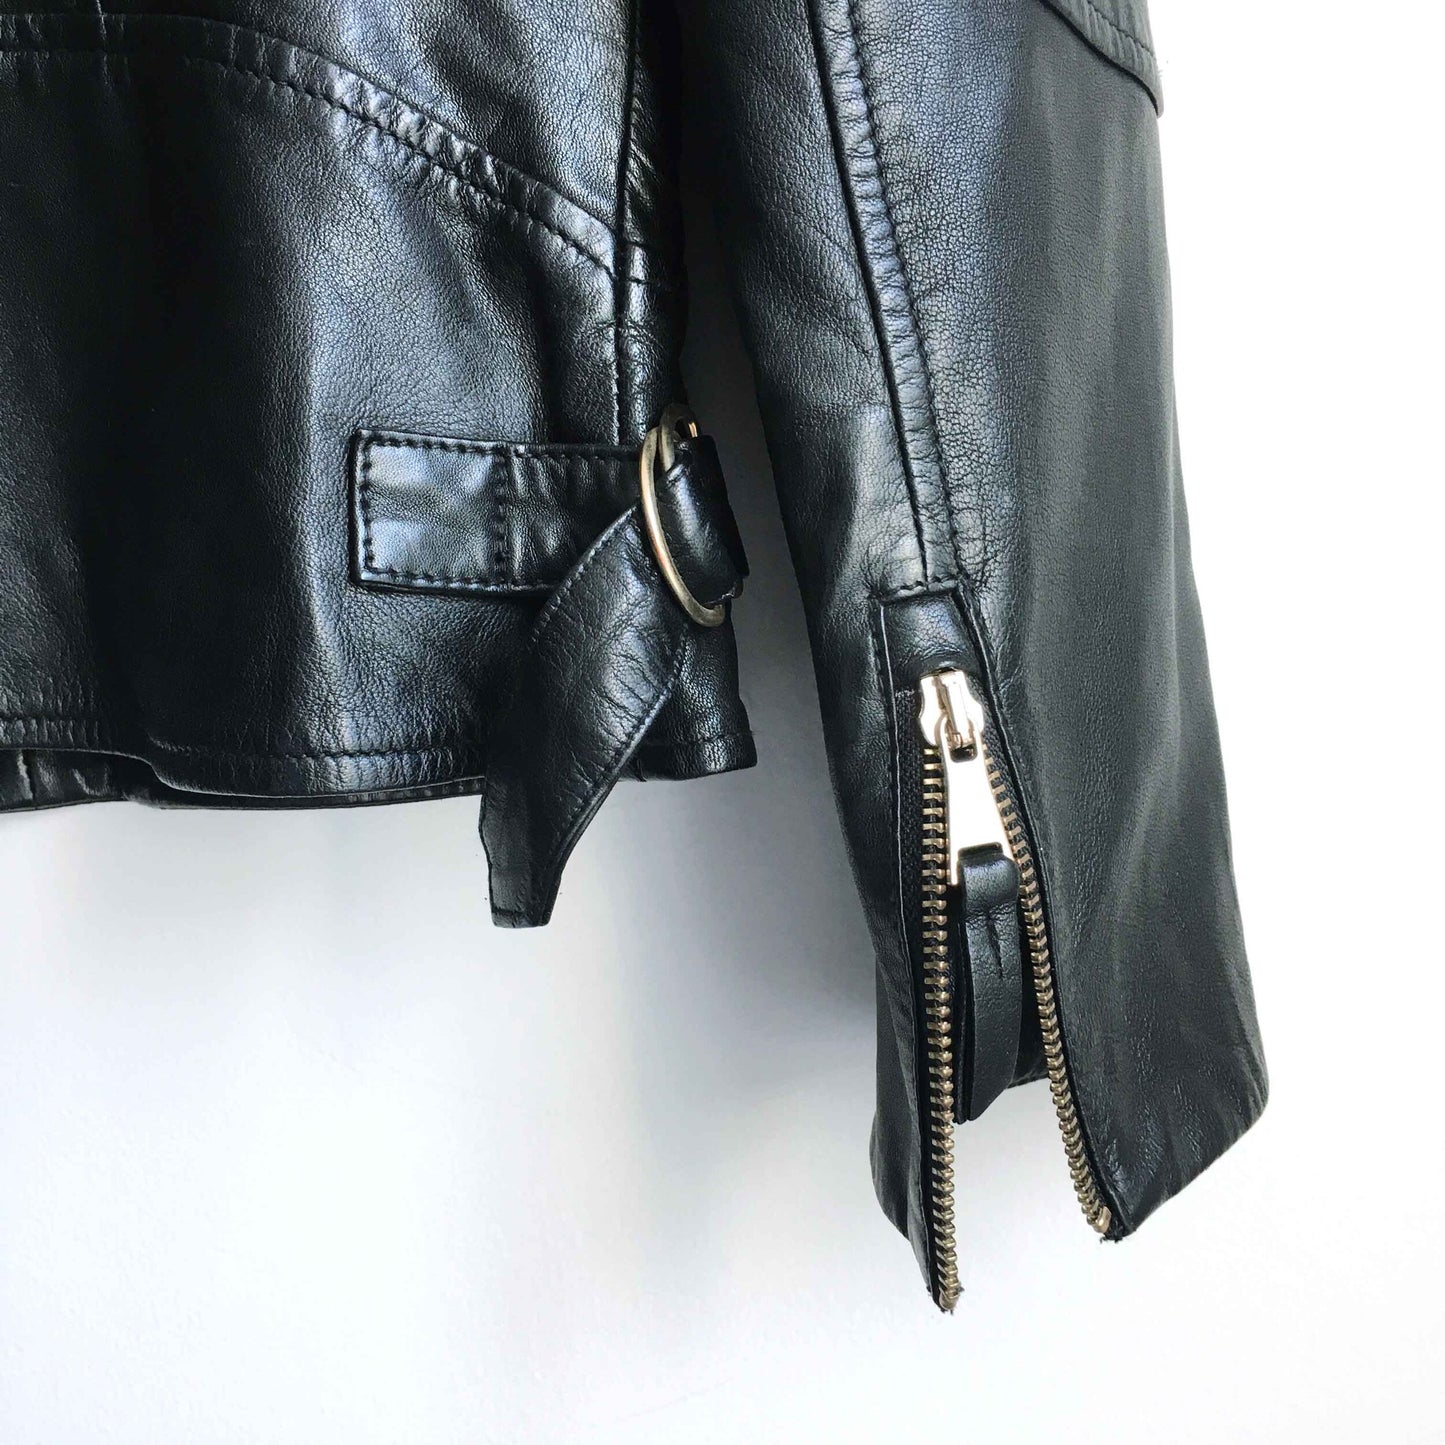 Danier Leather Moto Jacket - size Small